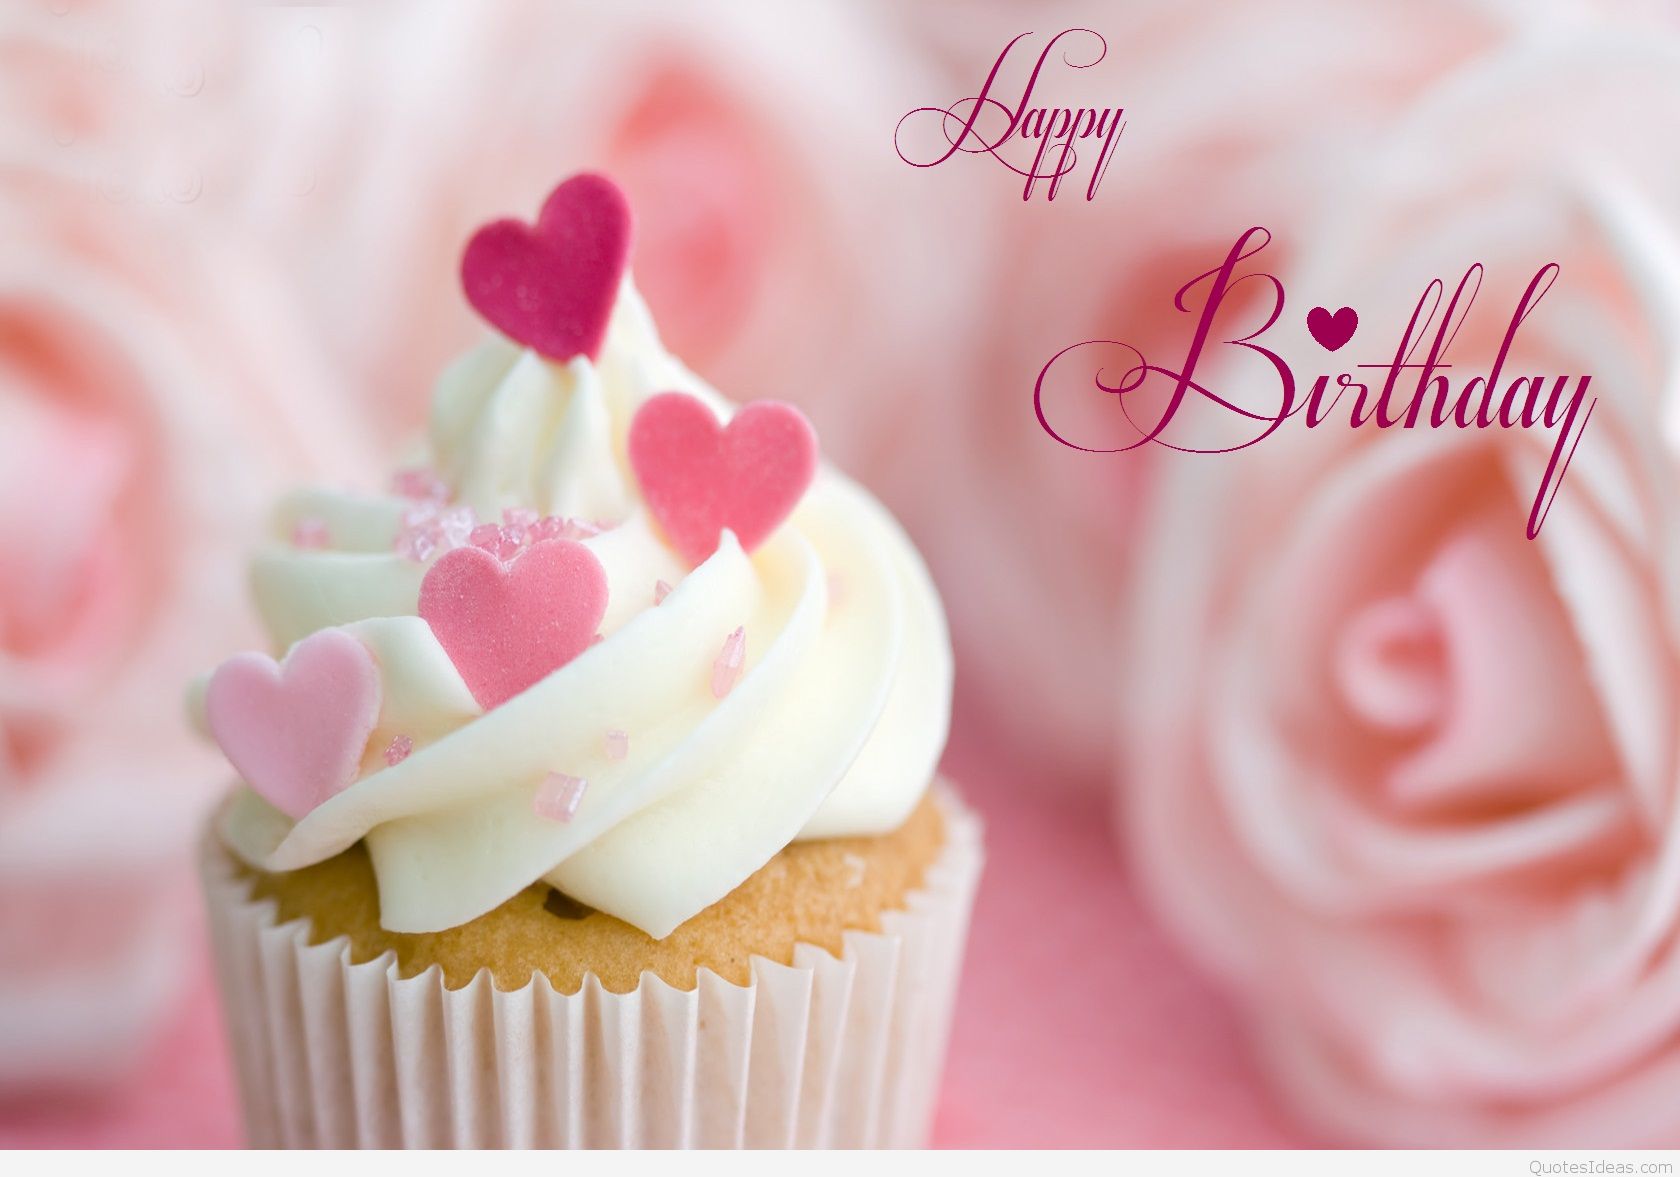 birthday wishes wallpaper,cupcake,buttercream,pink,icing,cake decorating